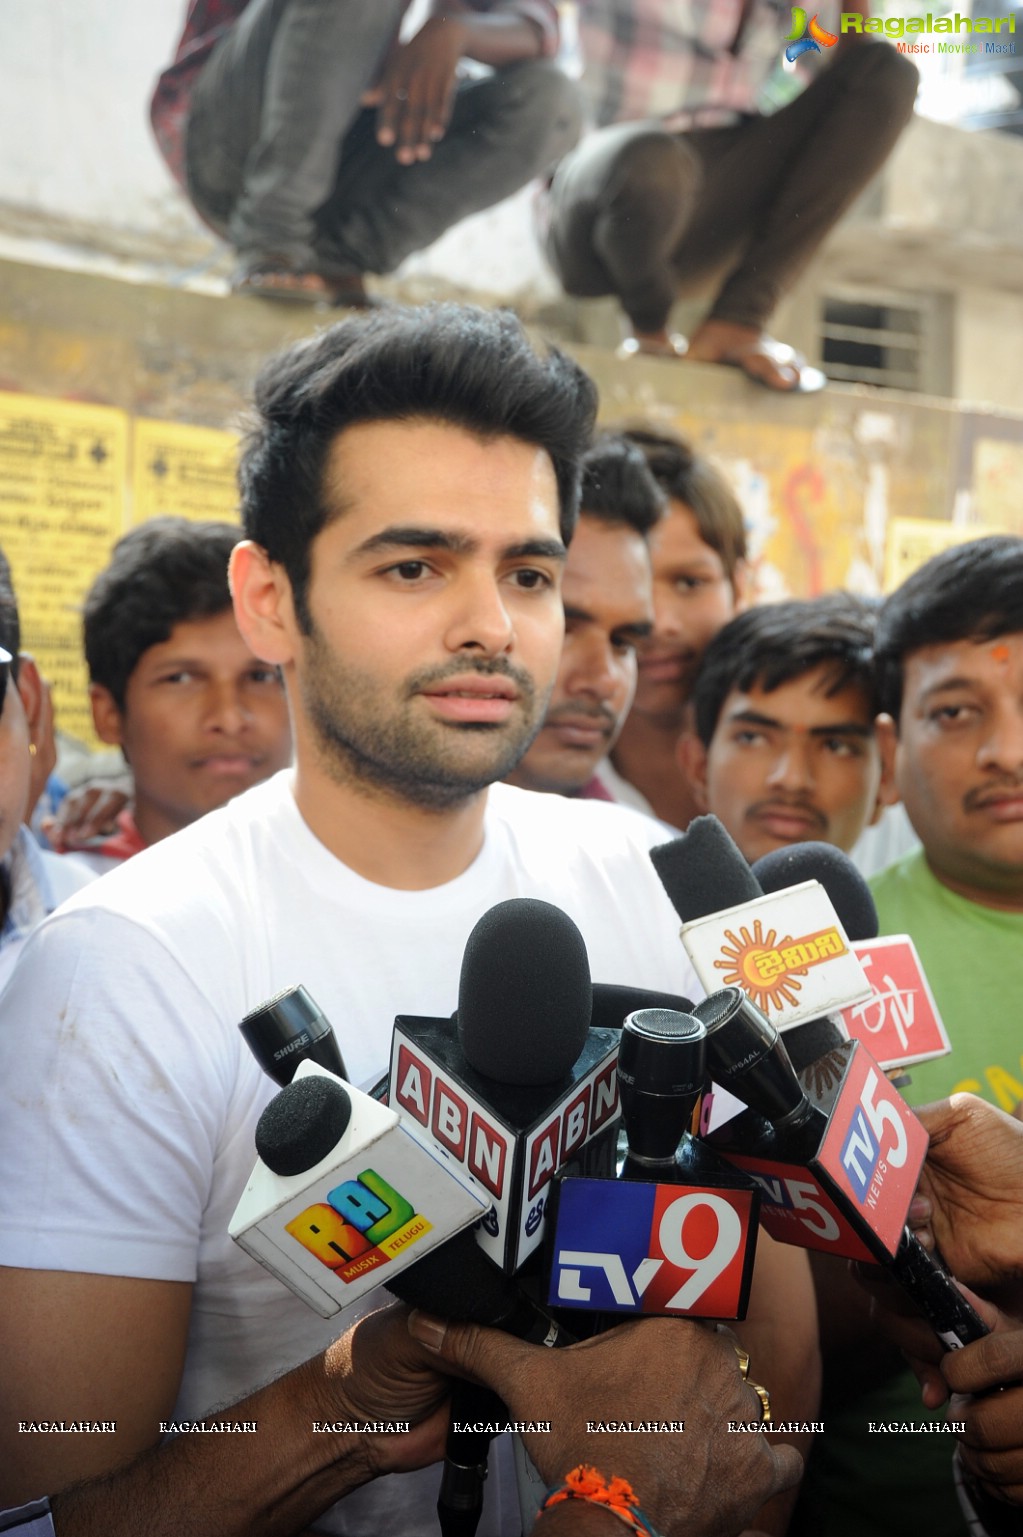 Hero Ram joins Swachh Bharat Campaign